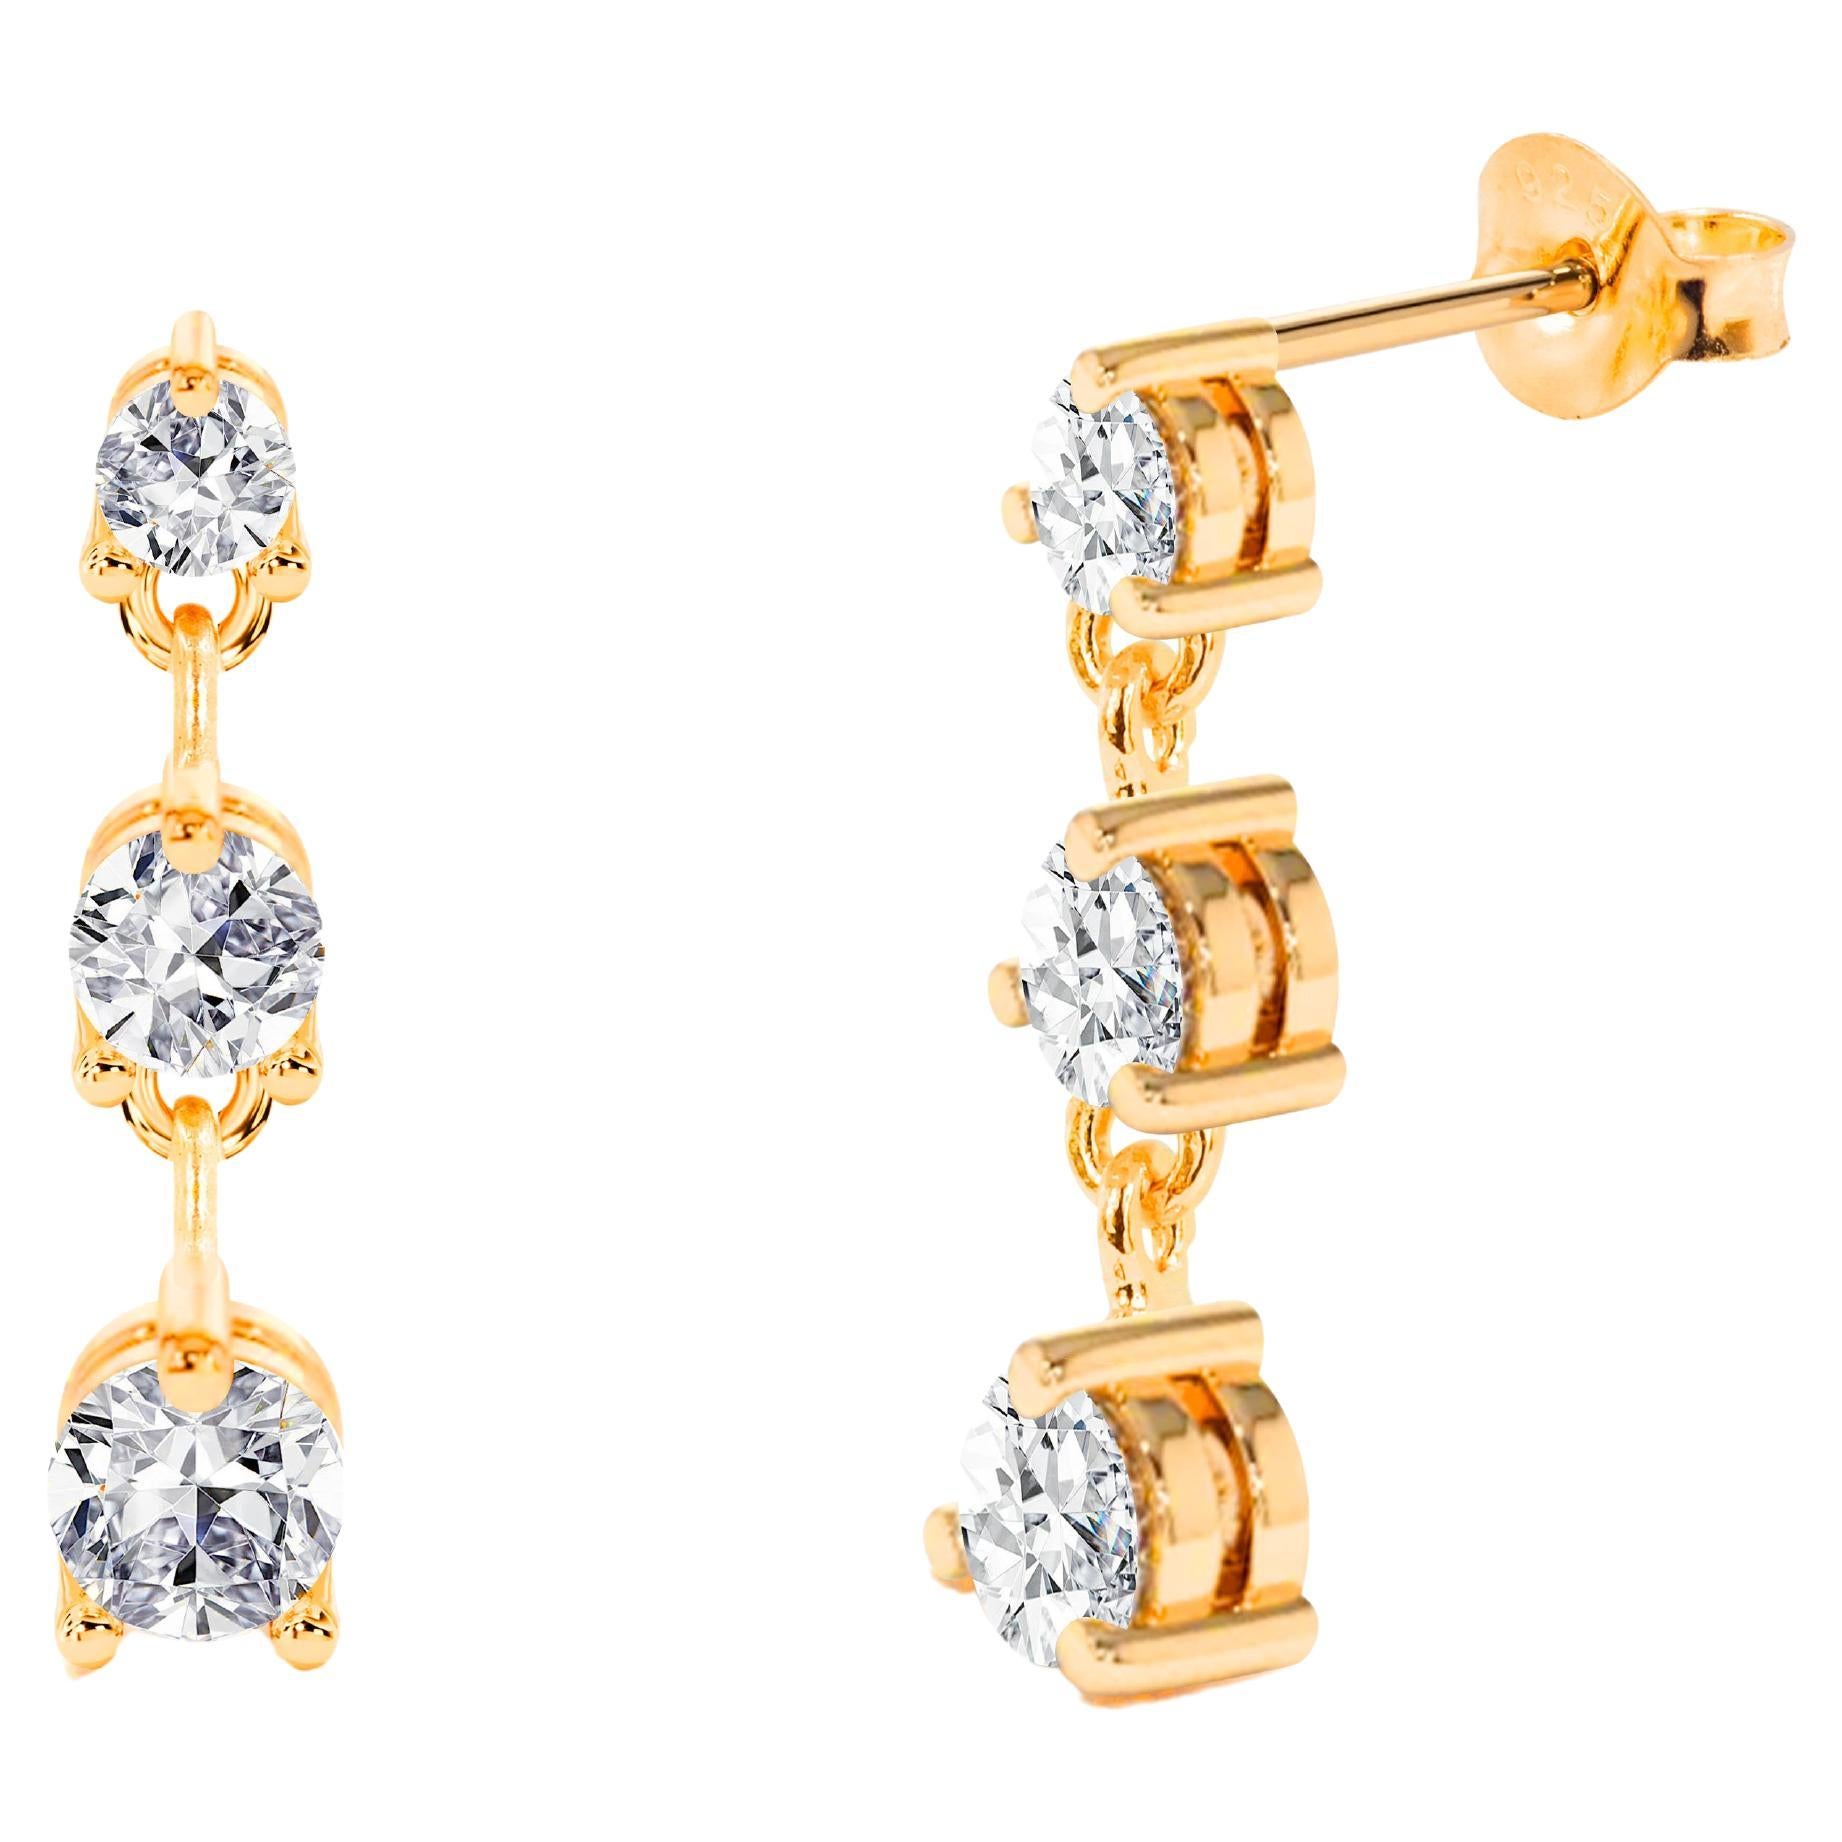 0.45ct Diamond Studs Earrings in 18k Gold For Sale